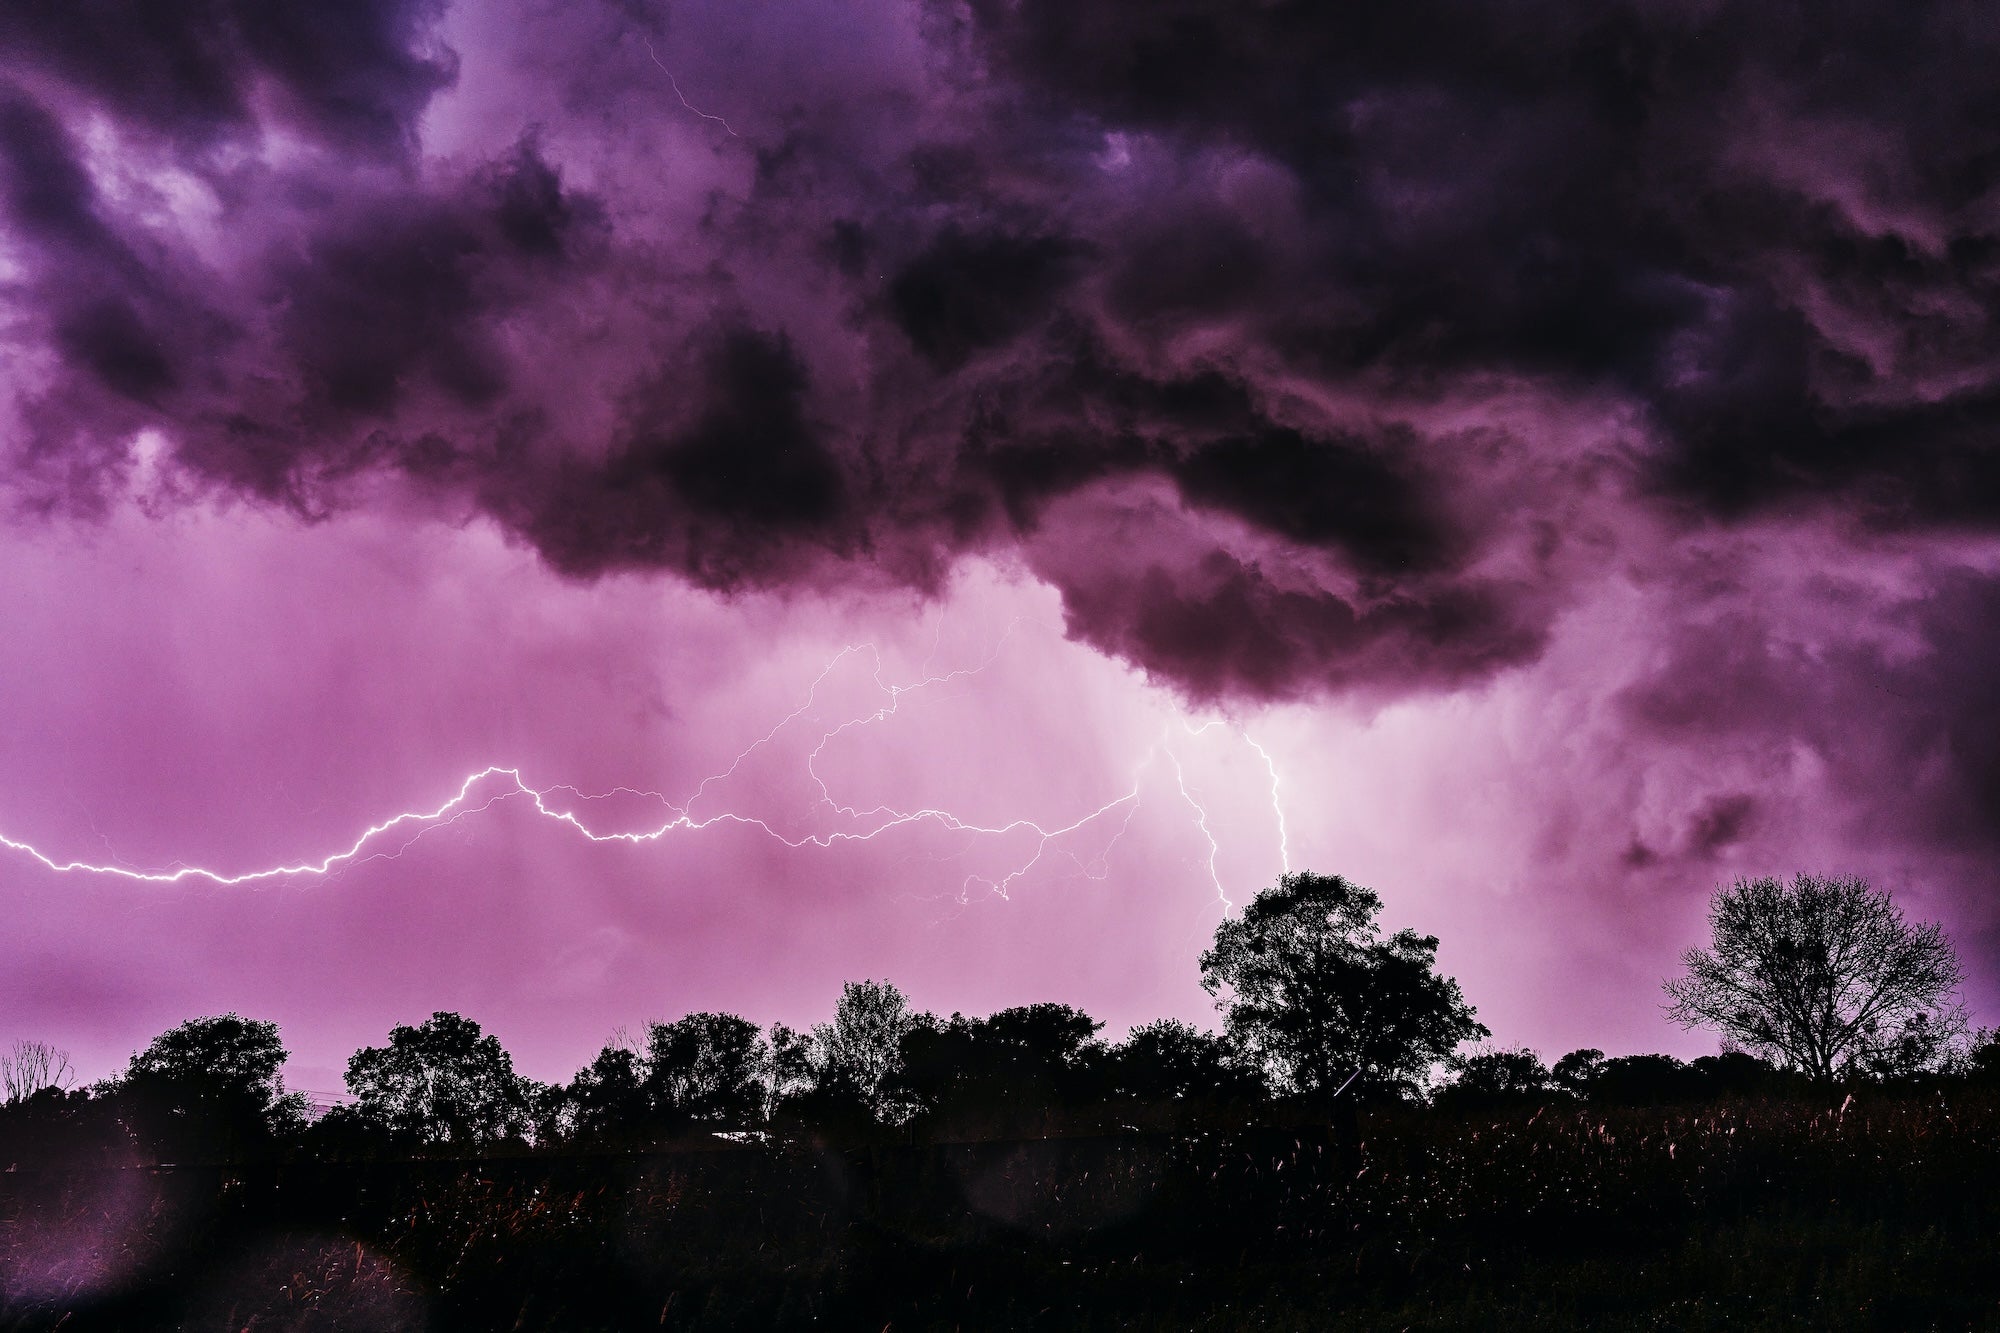 Purple stormy landscape with lightning across the sky